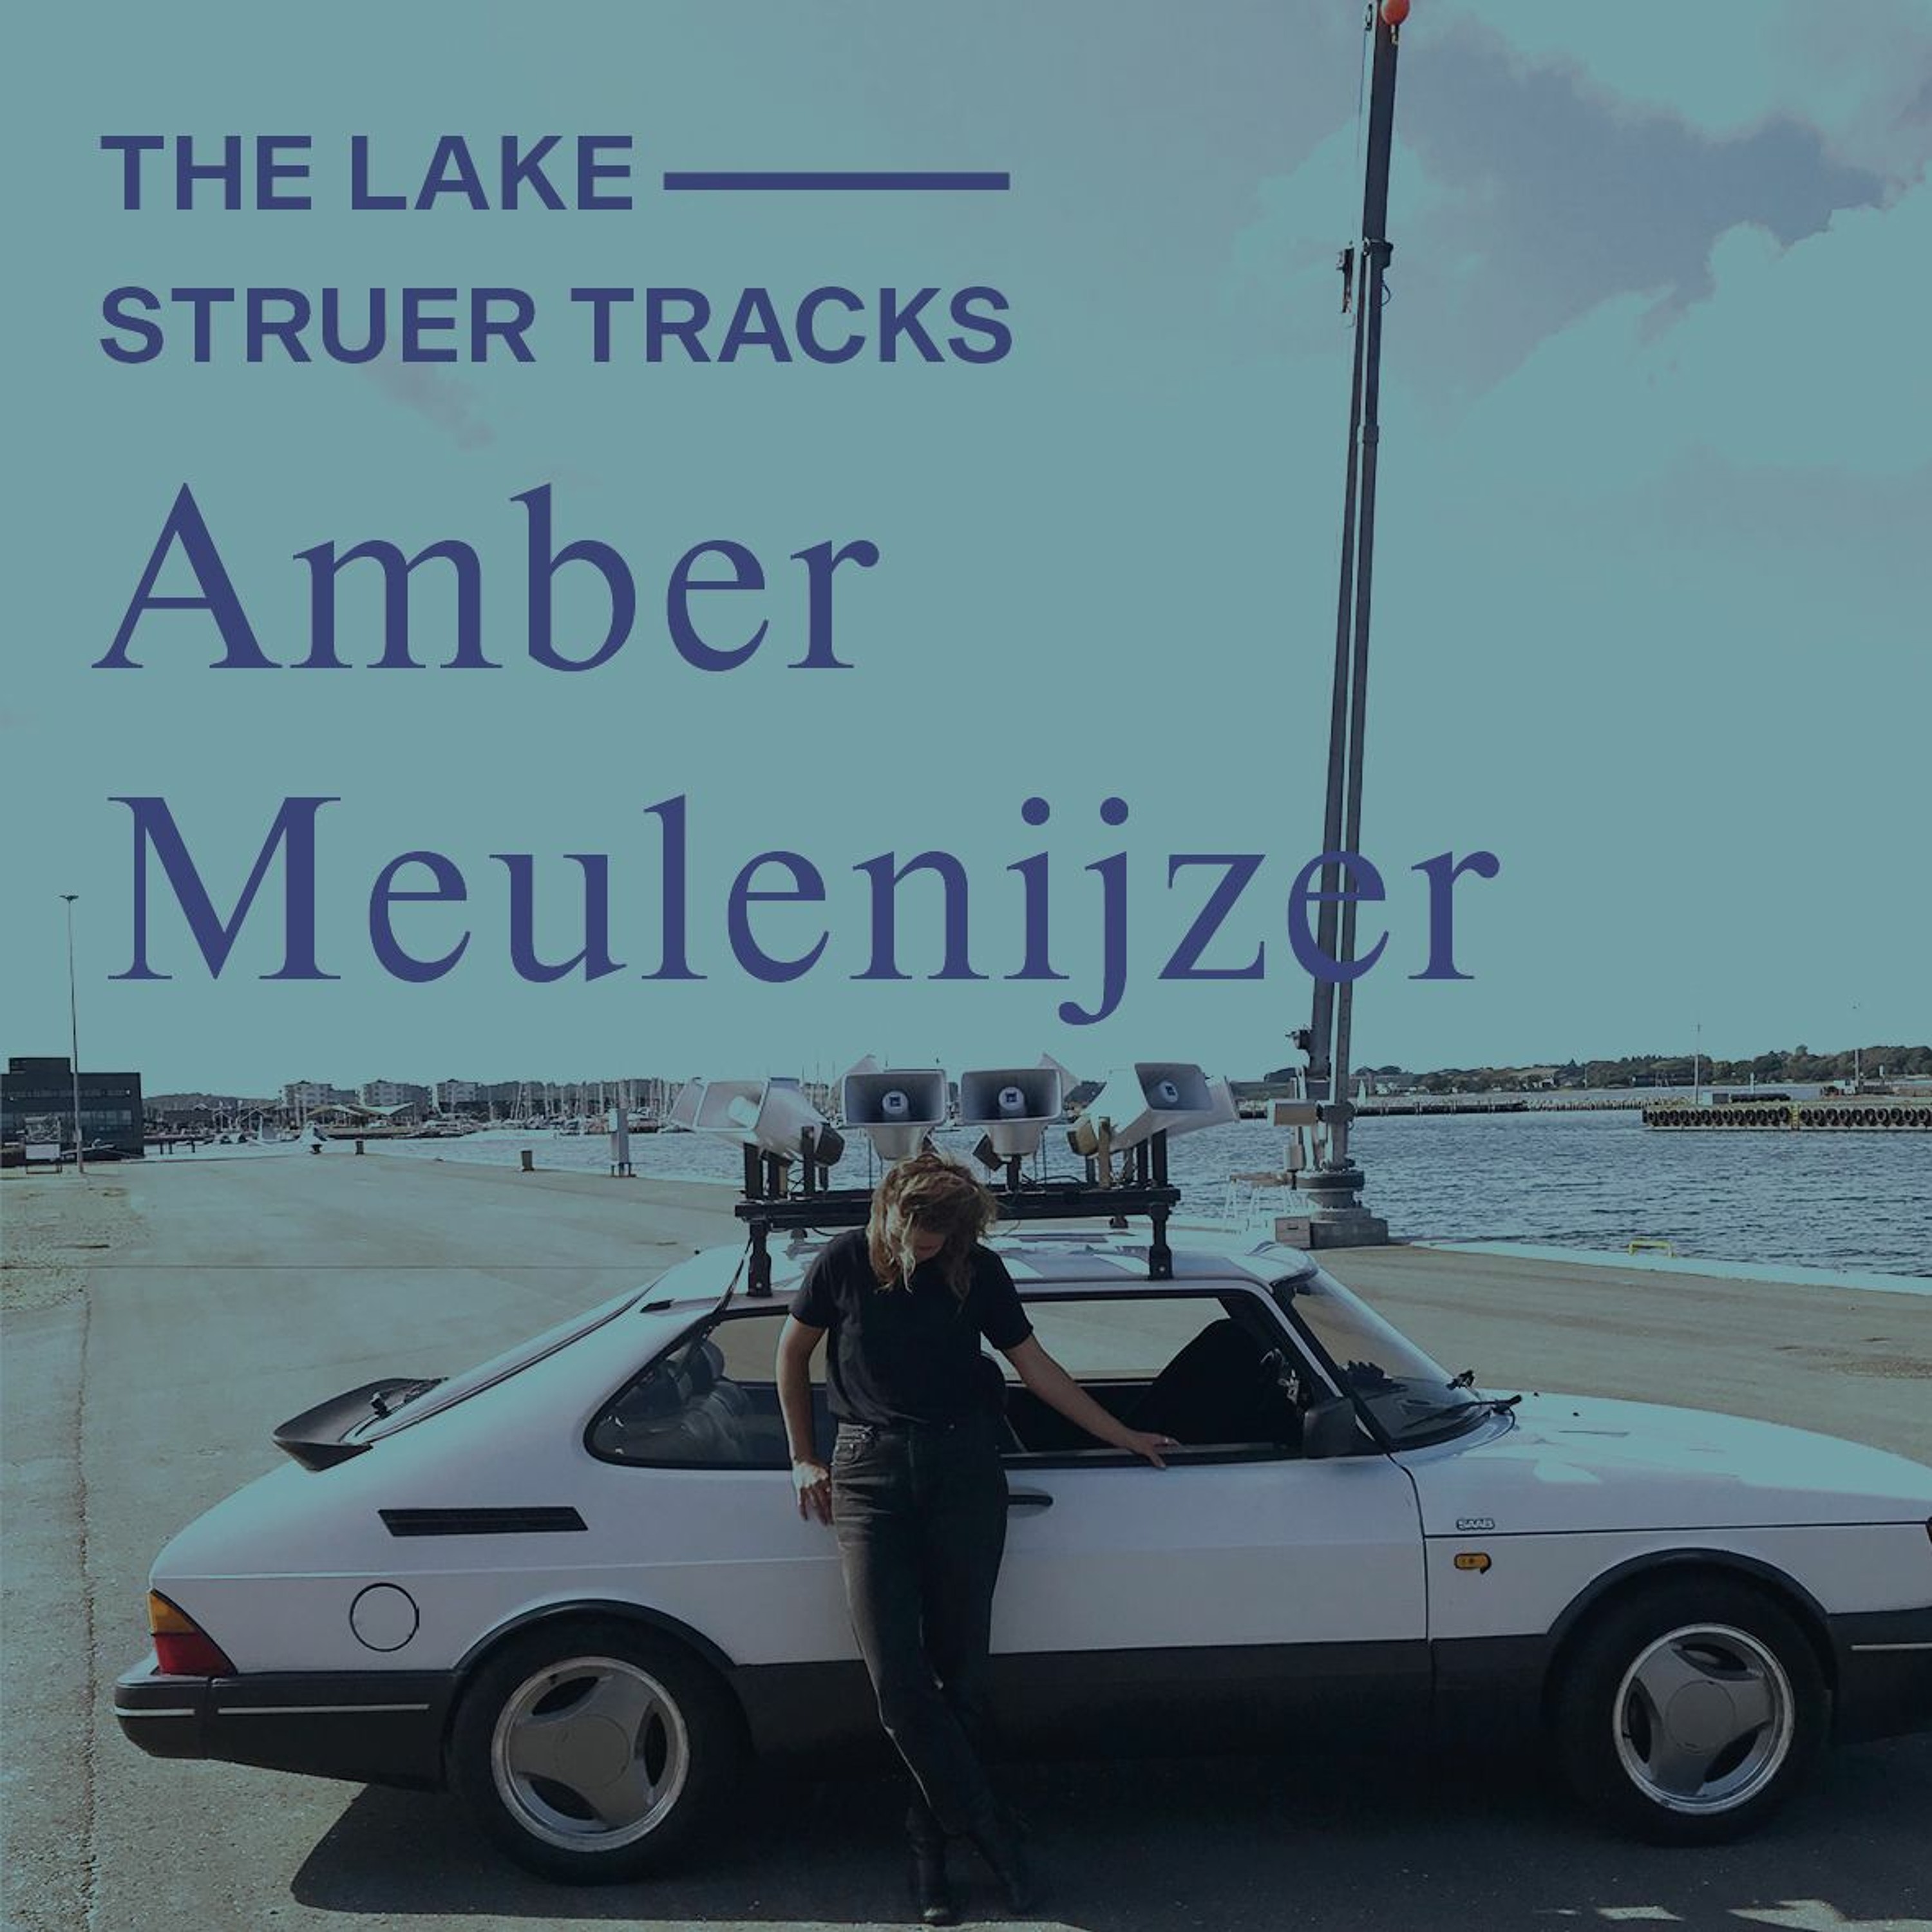 The Lake ⏤ Struer Tracks: Driving in Amber Meulenijzer’s Saab sculpture